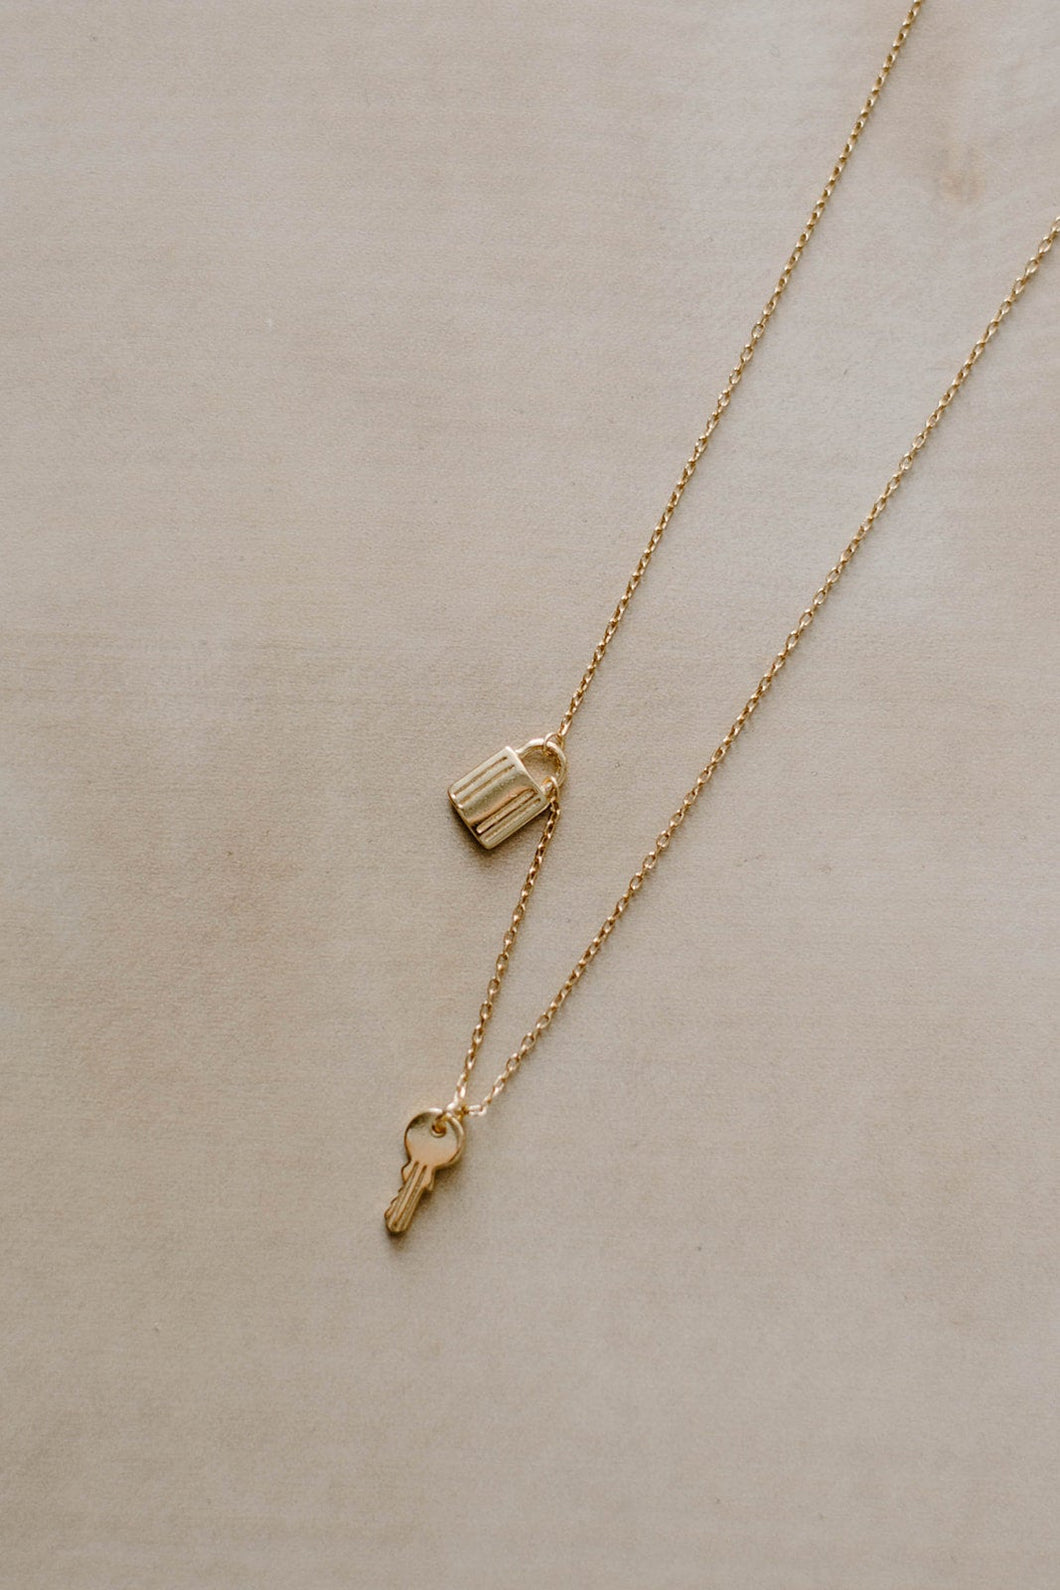 BONNIE - French vintage street style dainty minimalist lock and key dainty necklace 925 silver boho gold padlock pendant key charm gift